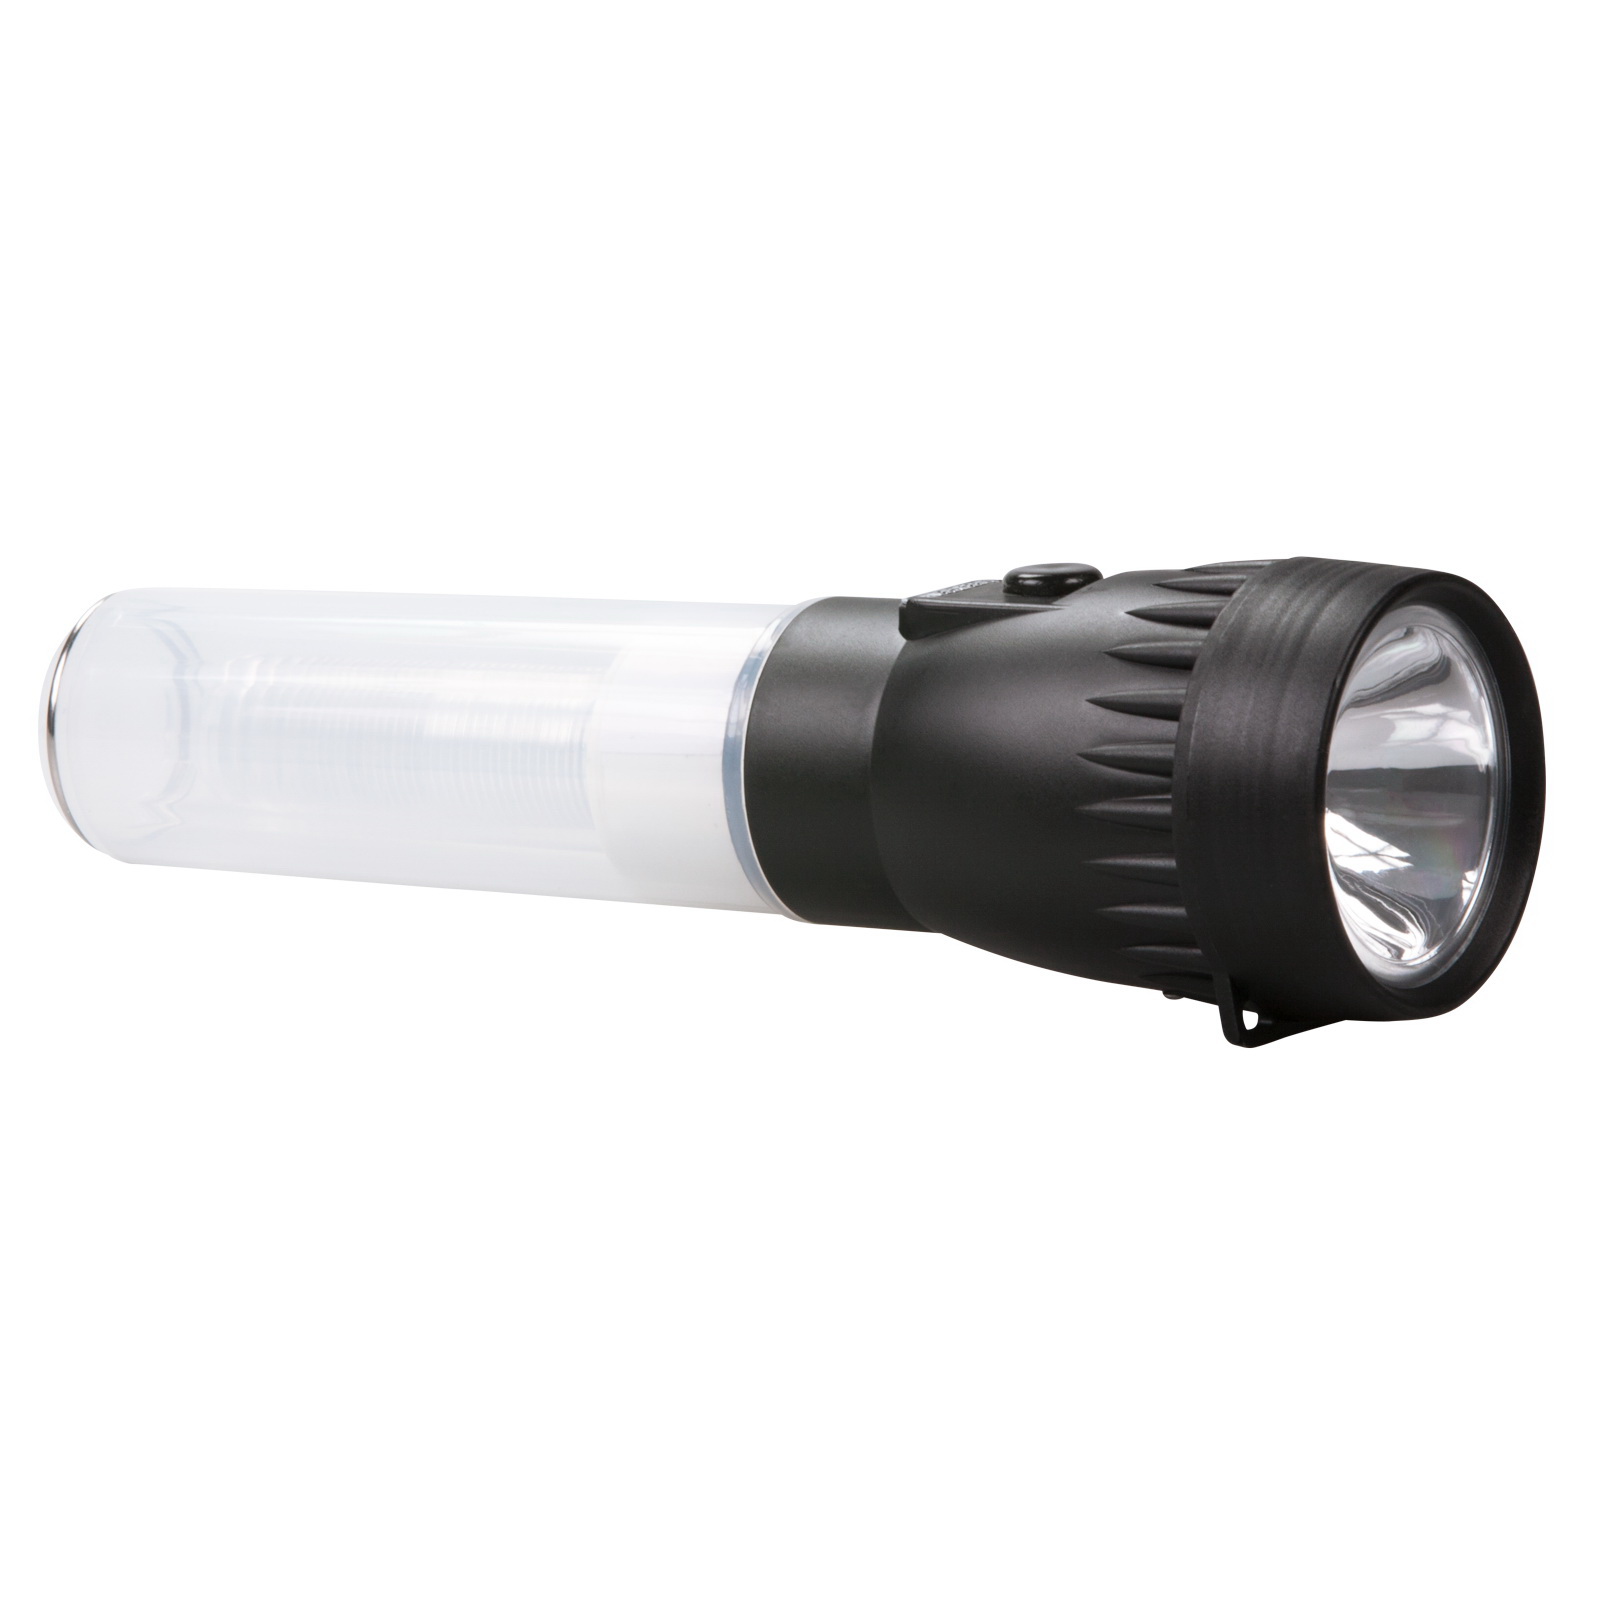 Life+Gear 41-3992 2,200-Lumen USB Rechargeable Lantern and Powerbank